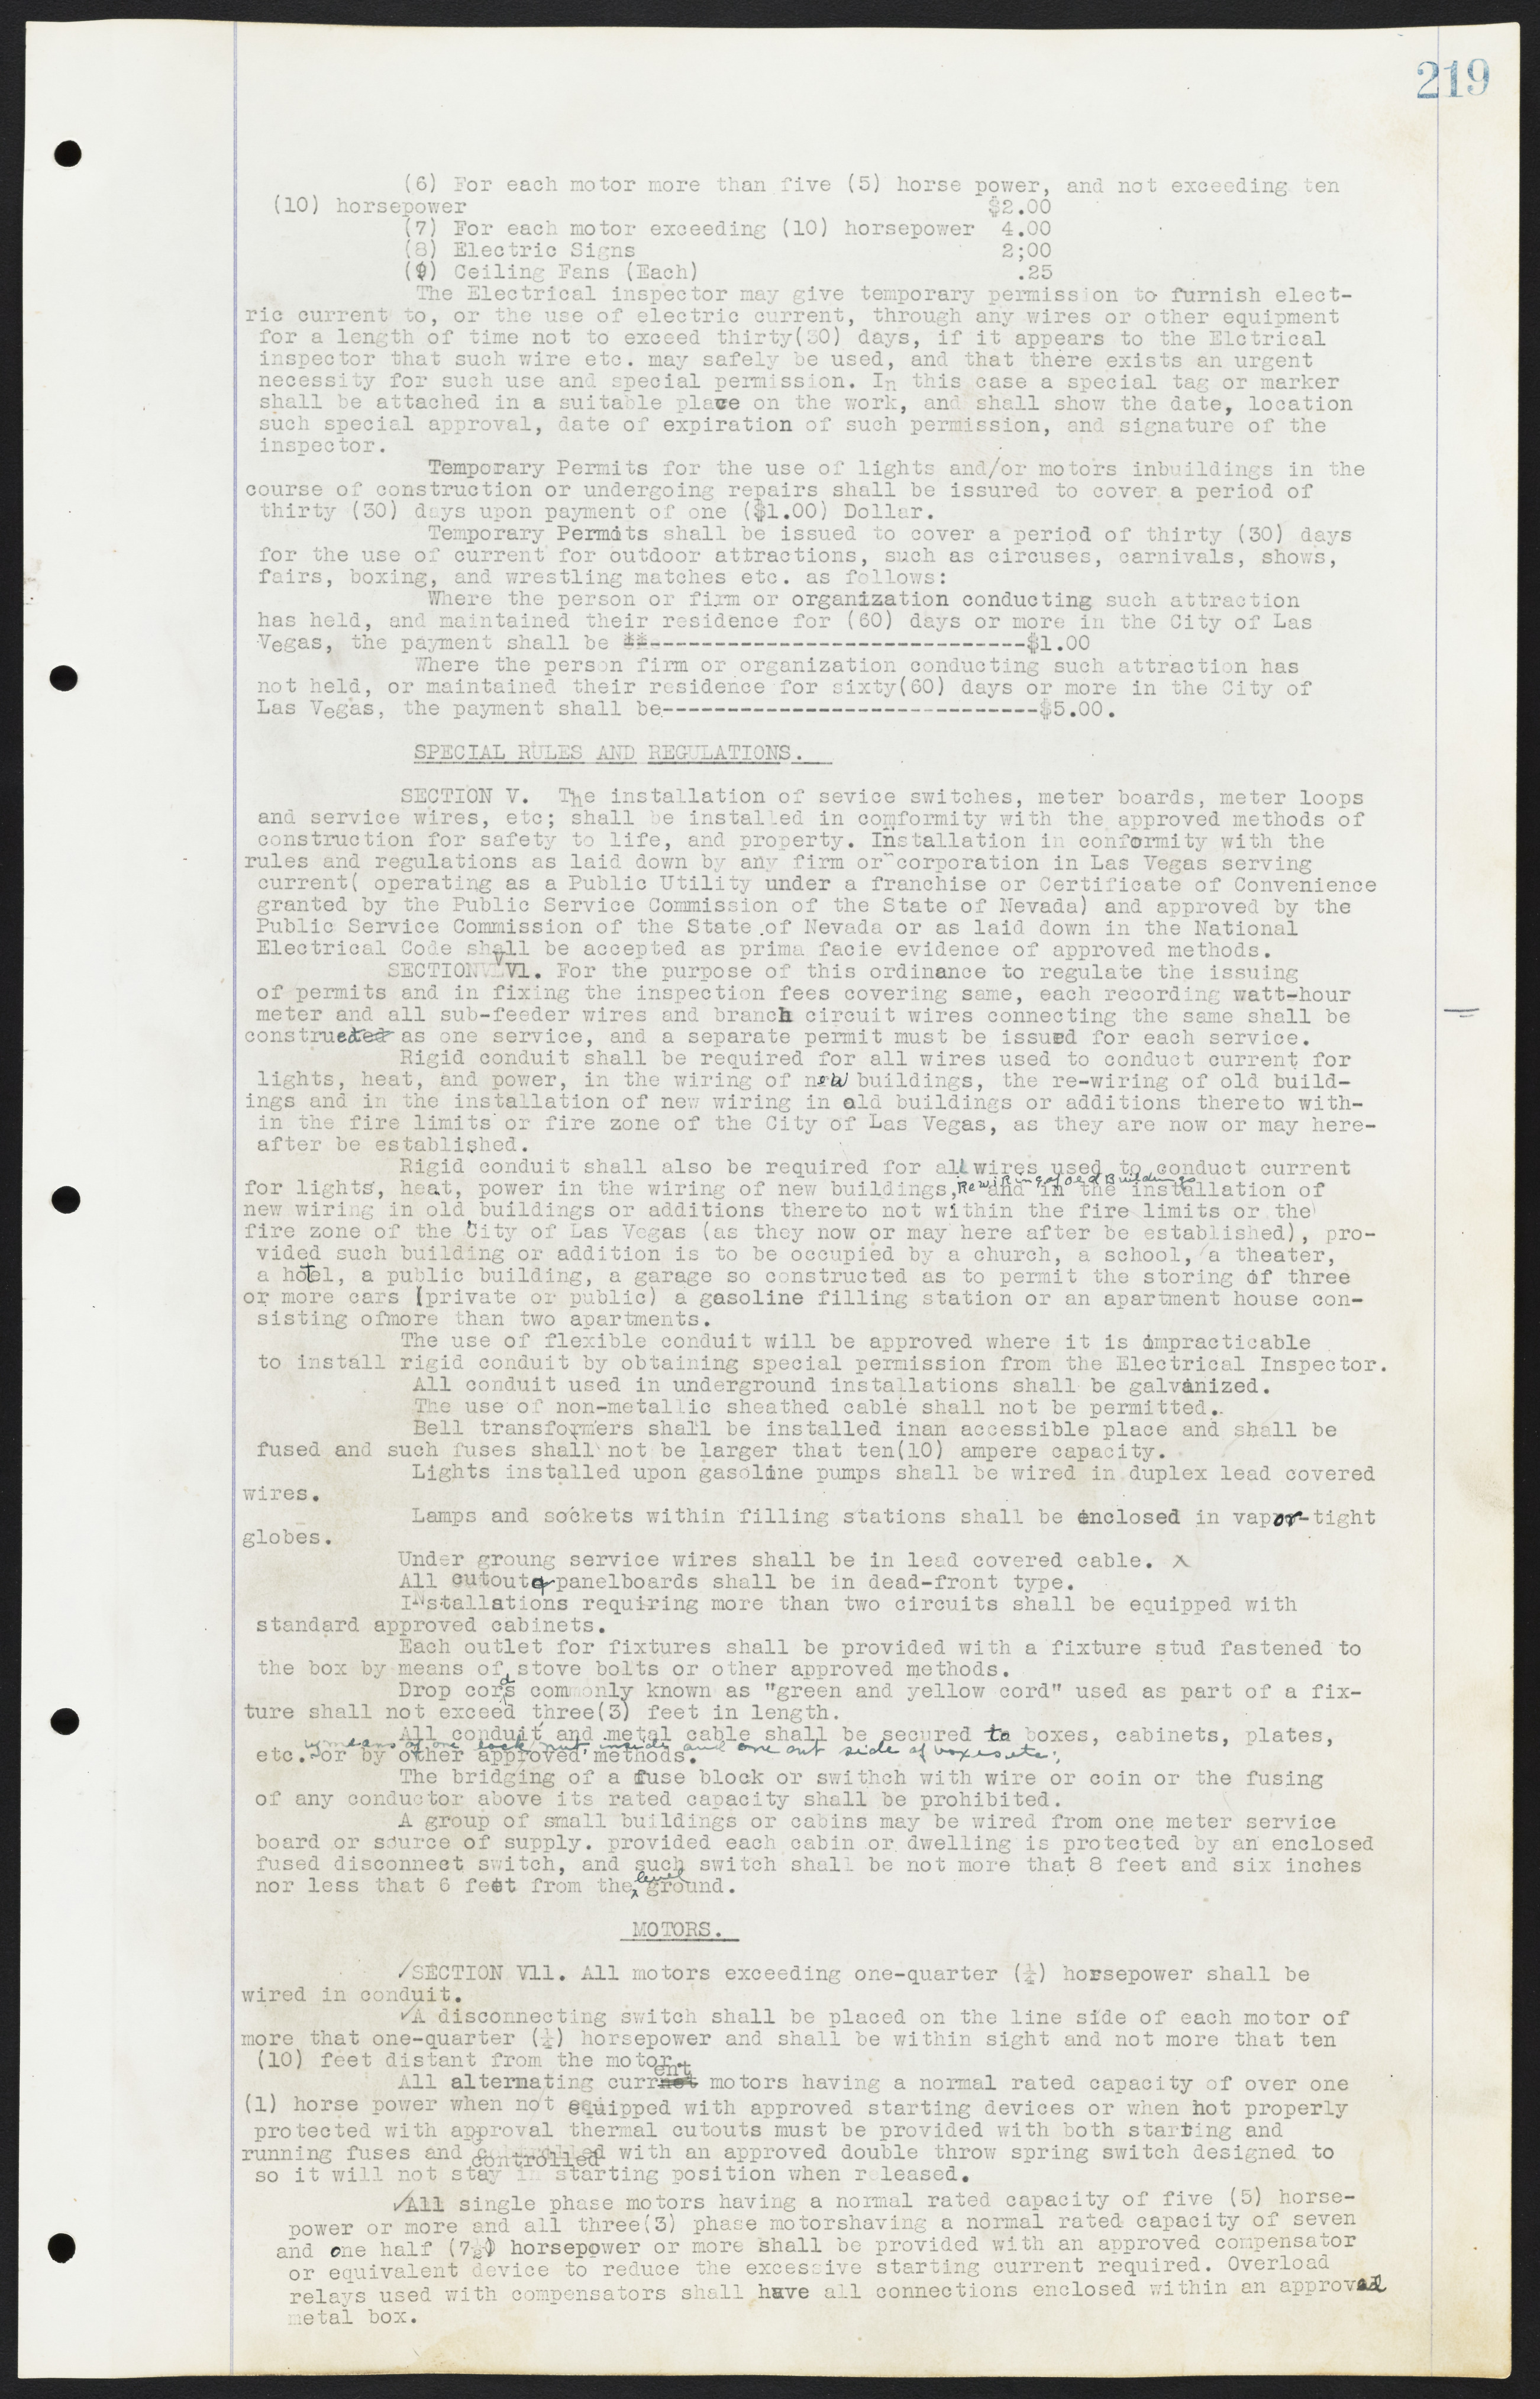 Las Vegas City Ordinances, July 18, 1911 to March 31, 1933, lvc000013-223